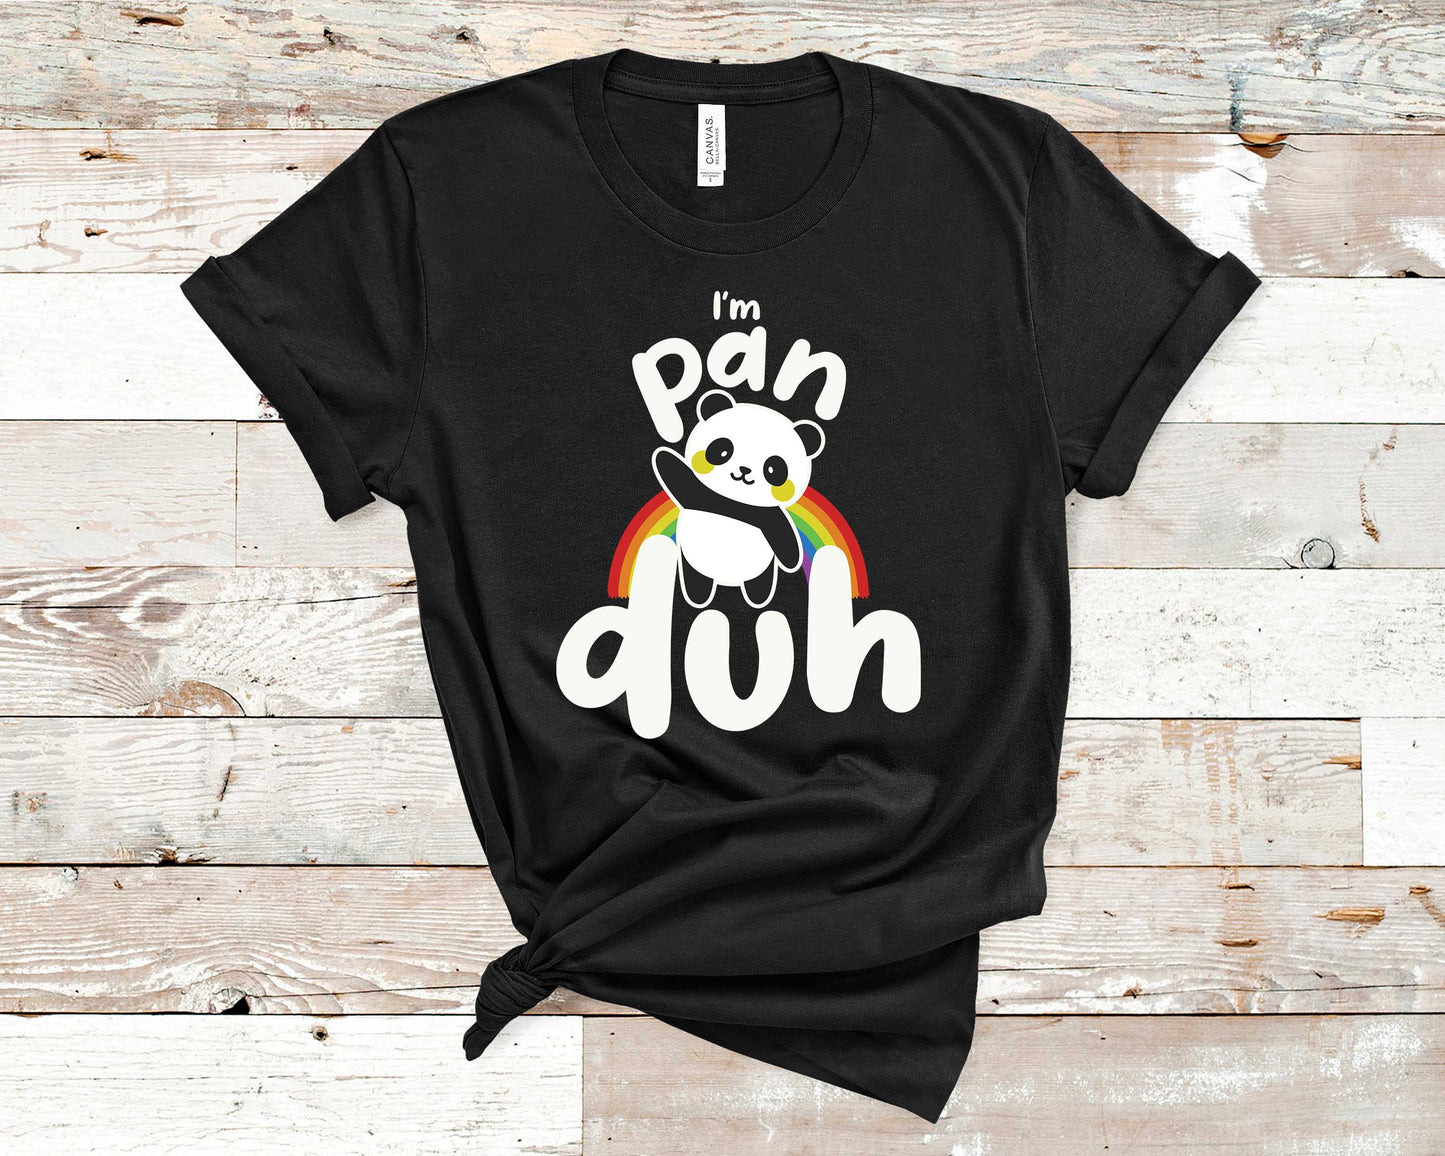 I'm Pan-duh - LGBTQ